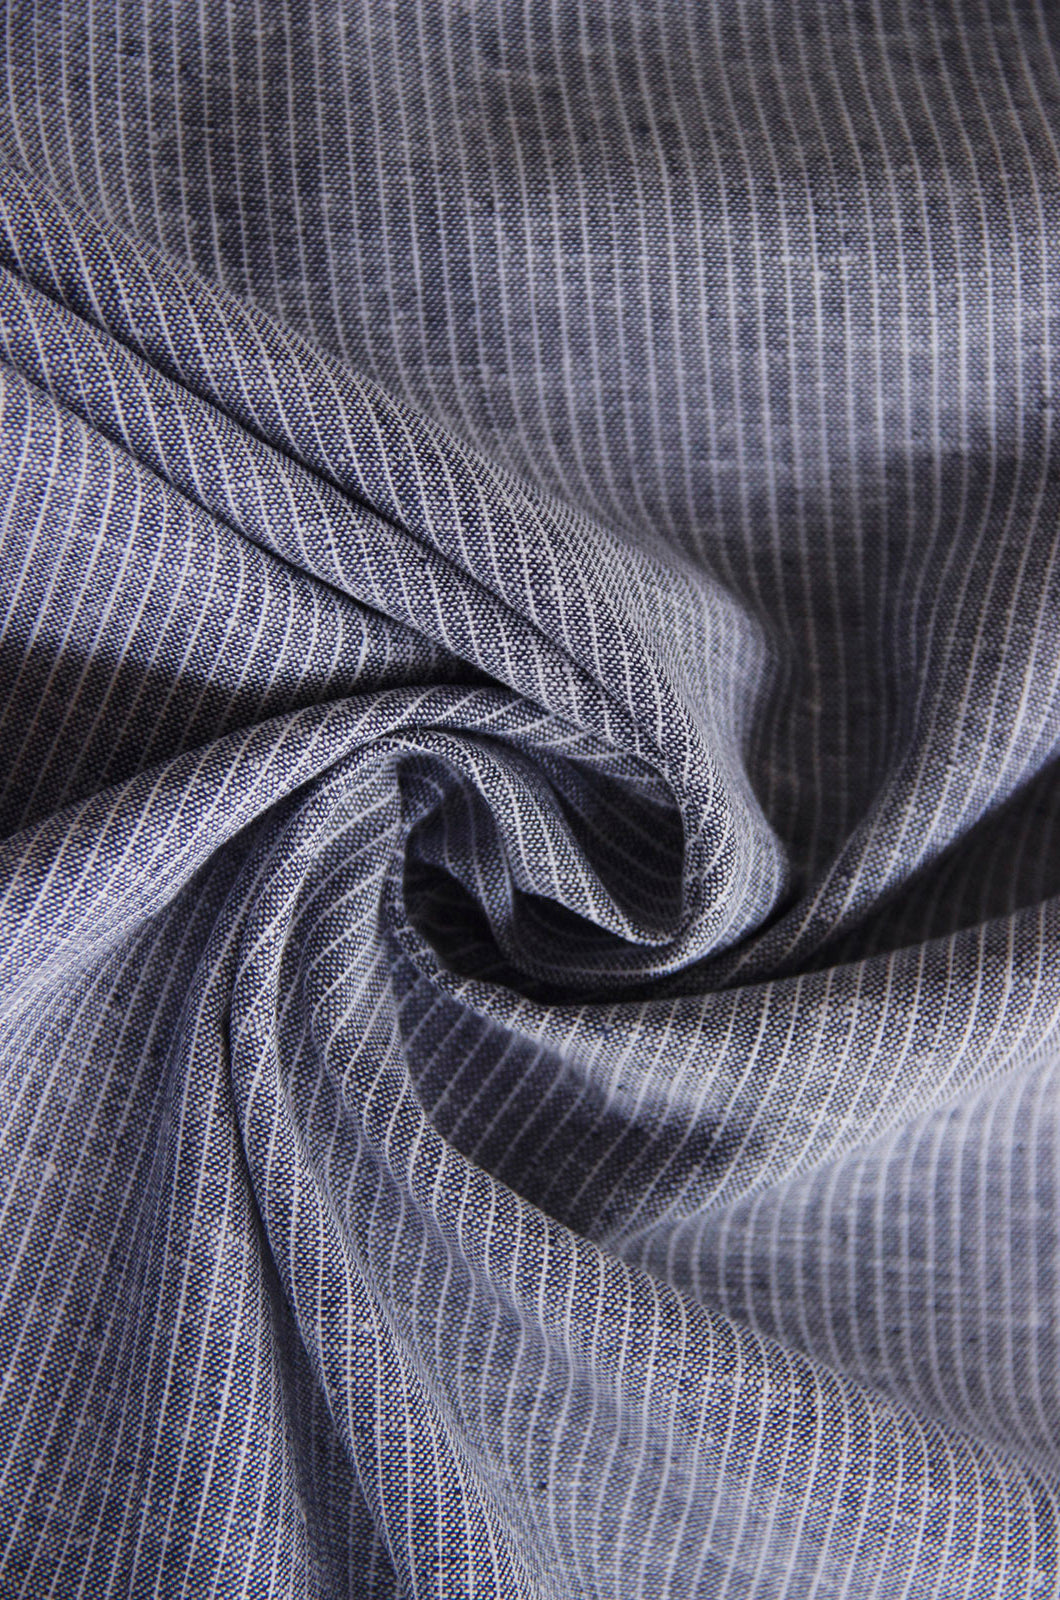 Buy 005-navy Half linen patterned fine stripes * From 50 cm